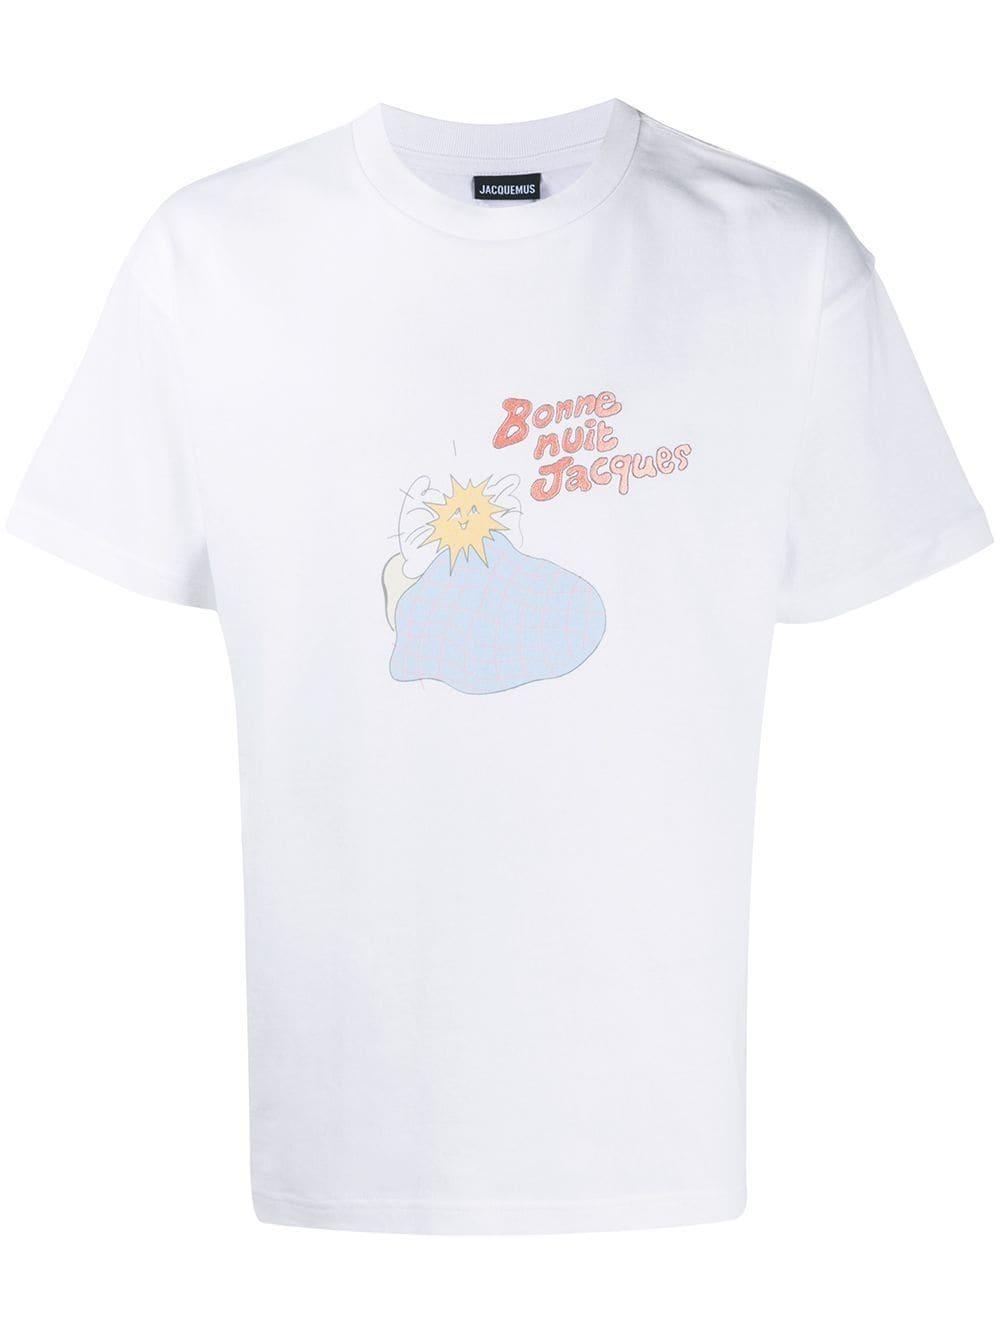 Jacquemus Bonne Nuit Jacques Printed T-shirt in White for Men | Lyst